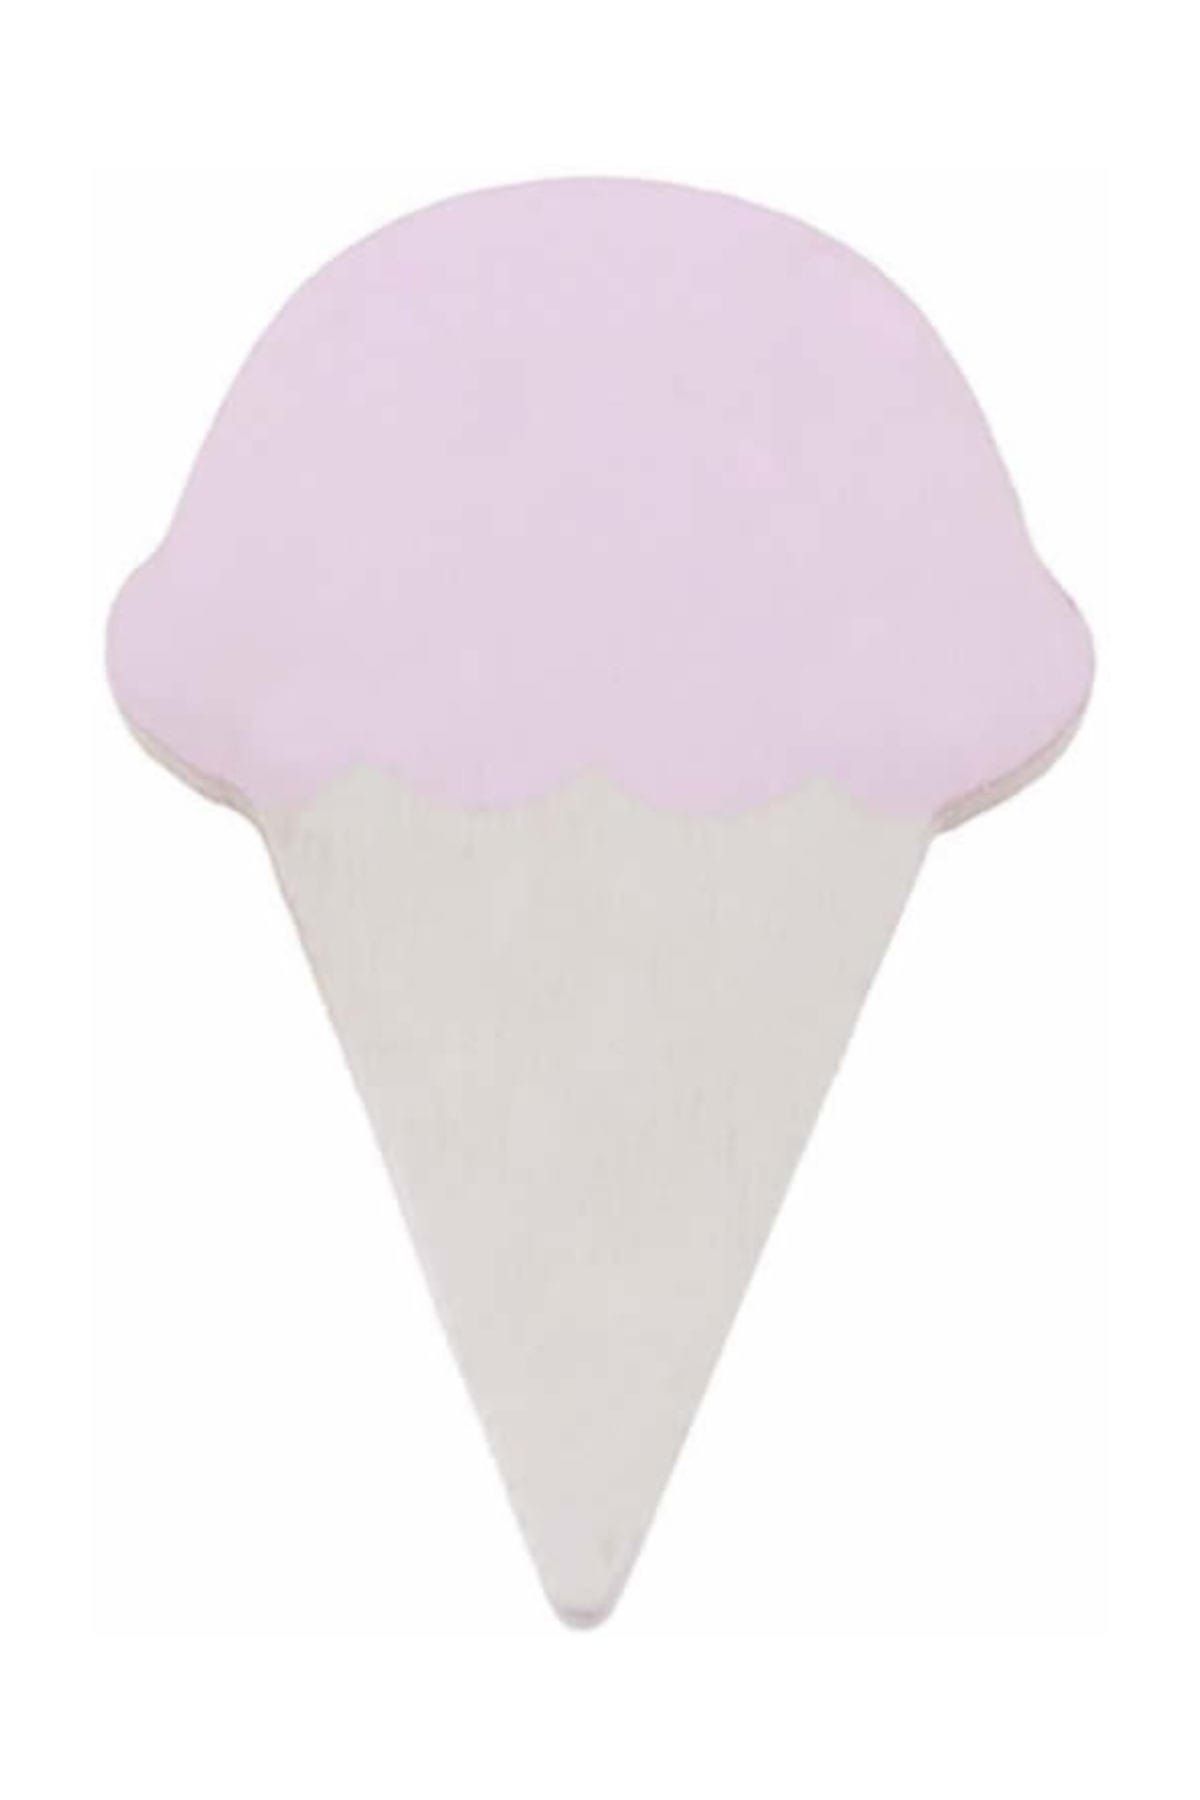 Miniminti Pembe Dondurma Askı Aparatı - Dolap Kulpu